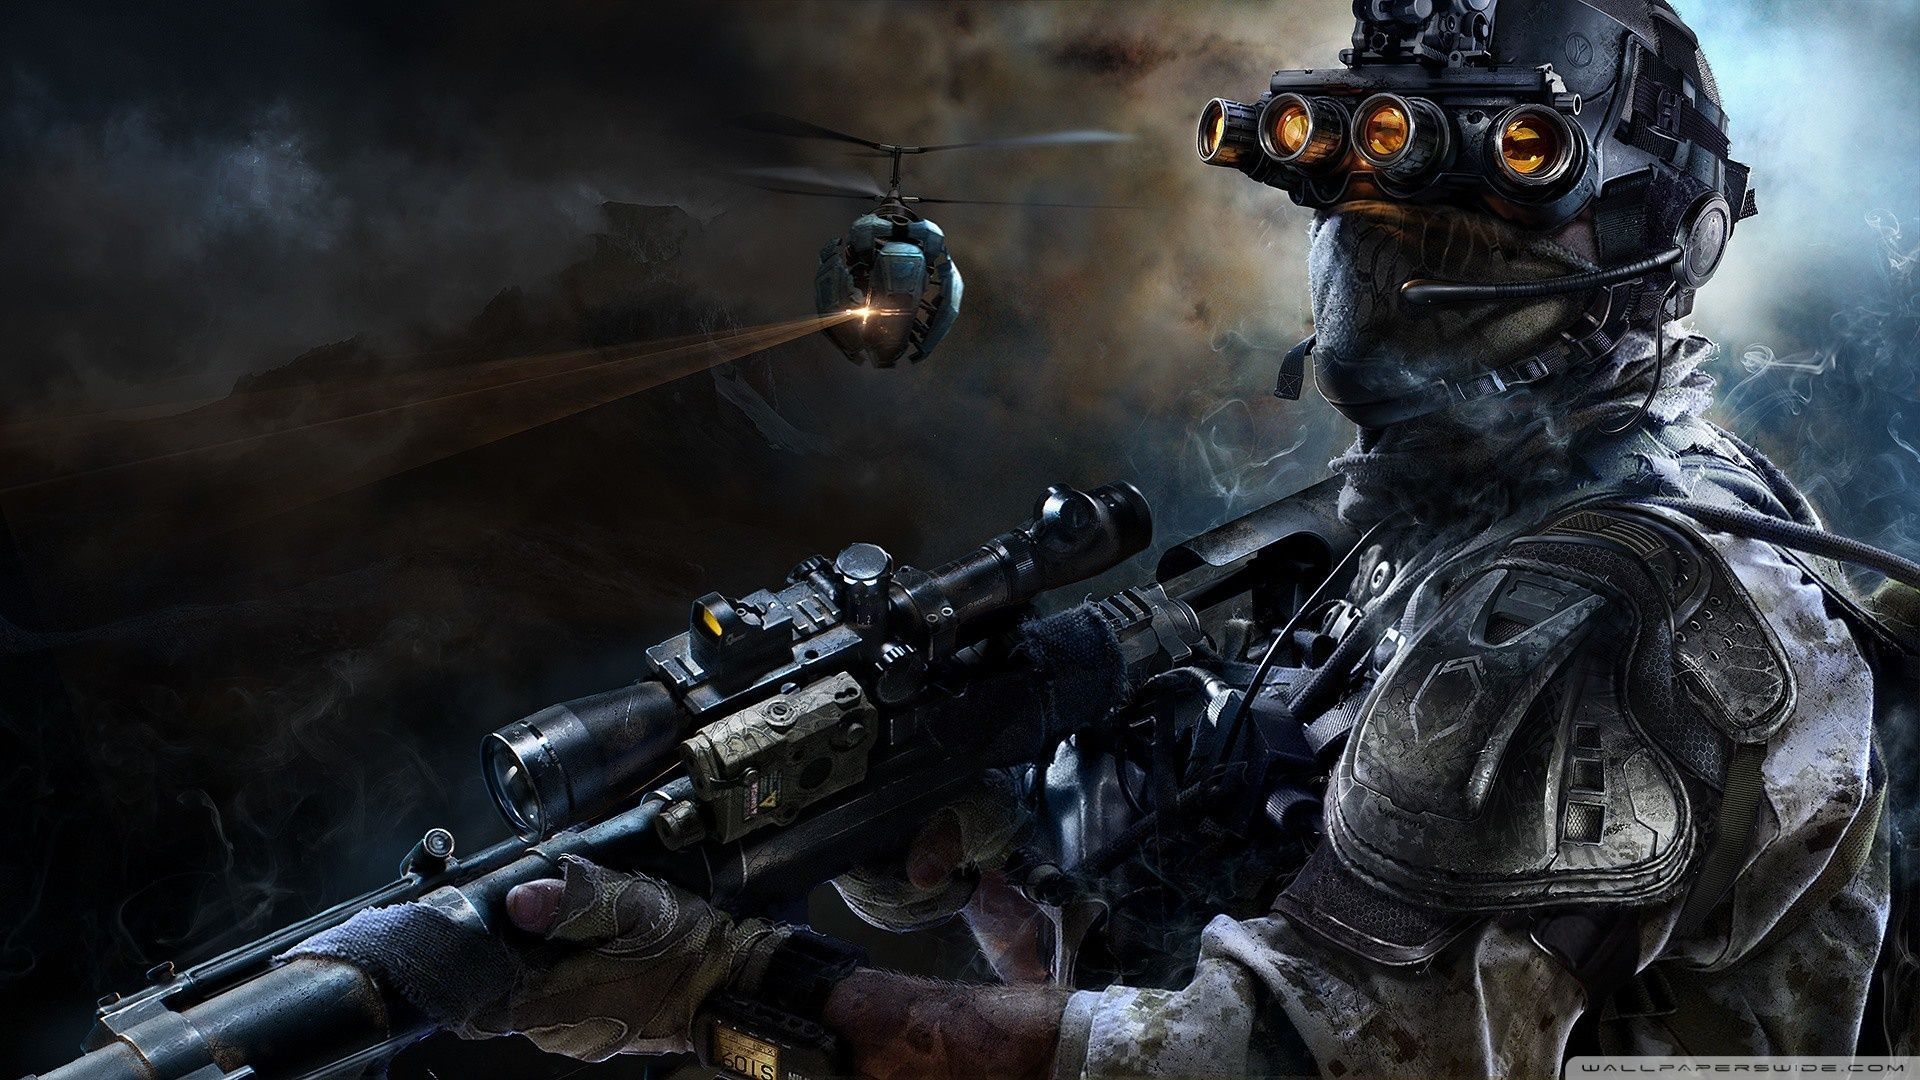 Sniper Ghost Warrior 3 video game Wallpaper Full HD [1920x1080 ...